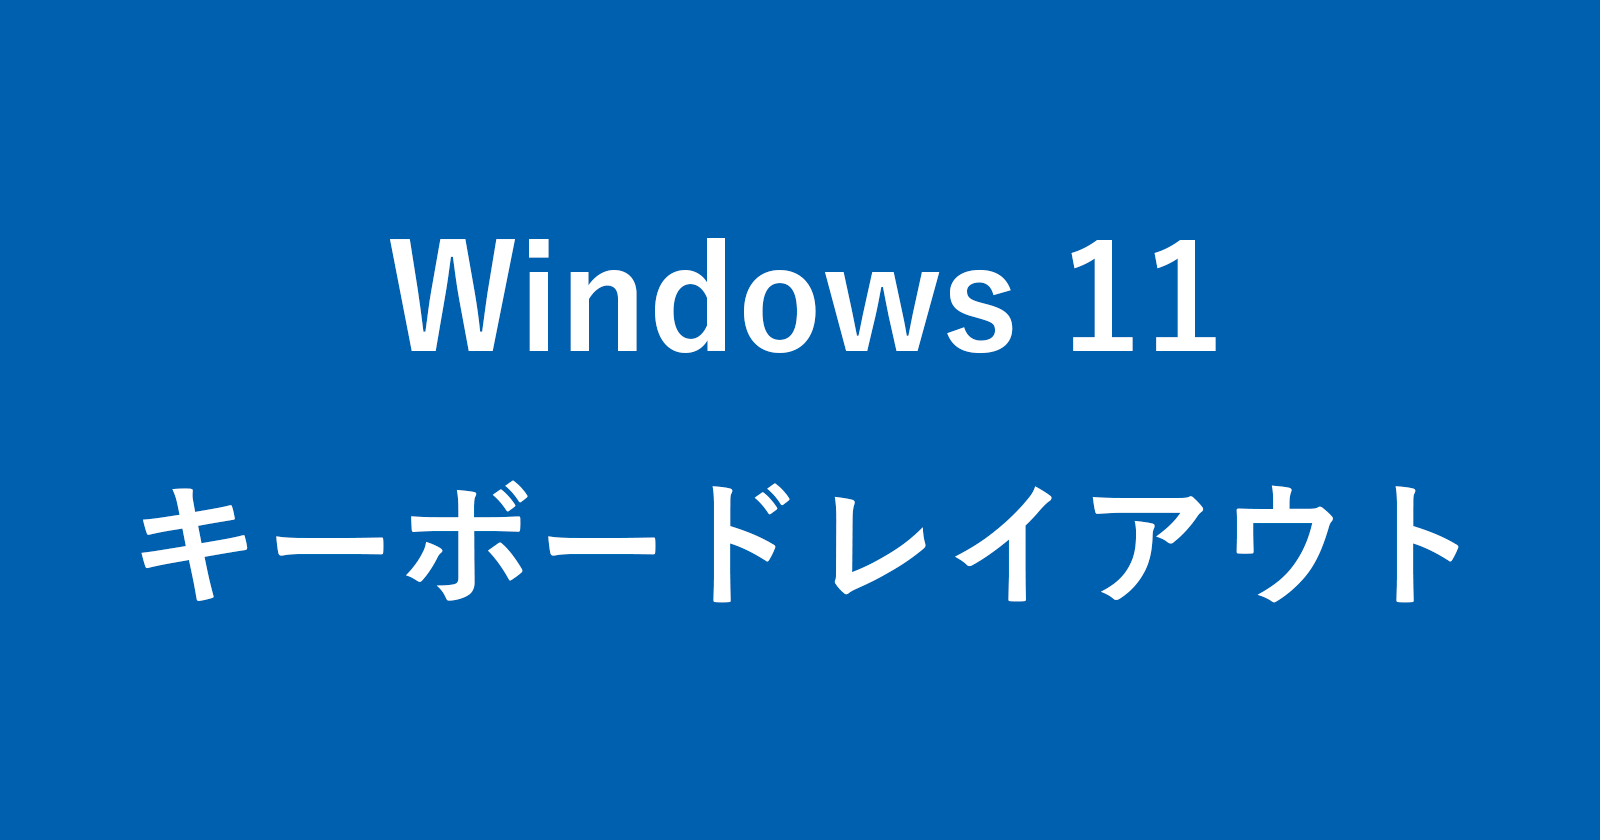 windows 11 keyboard layout